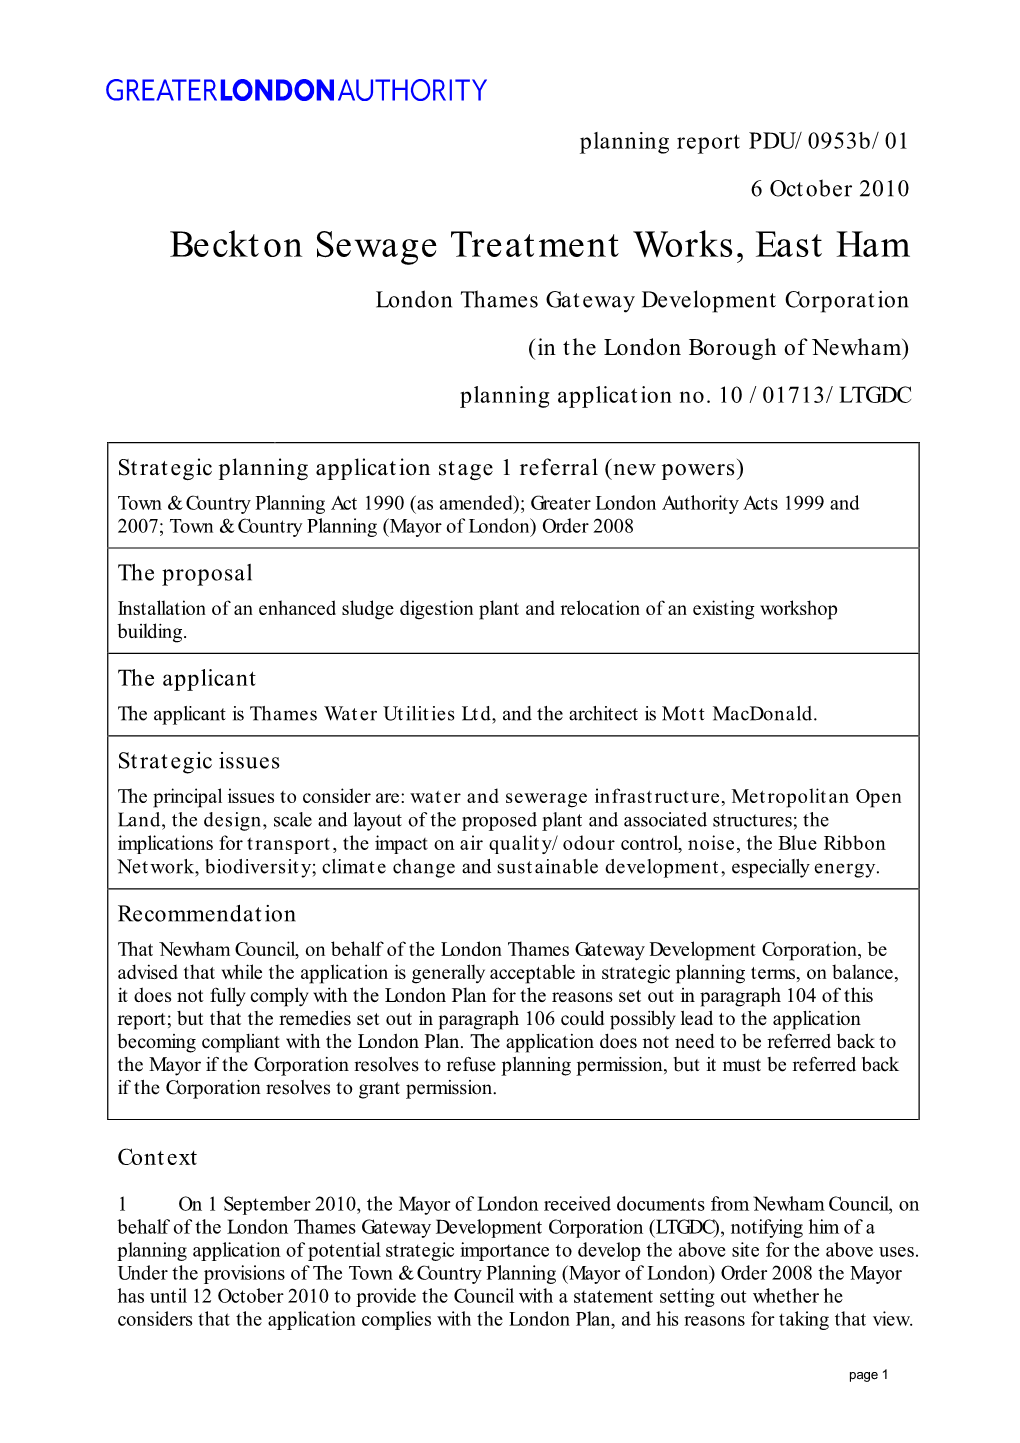 Beckton Sewage Treatment Works, East Ham